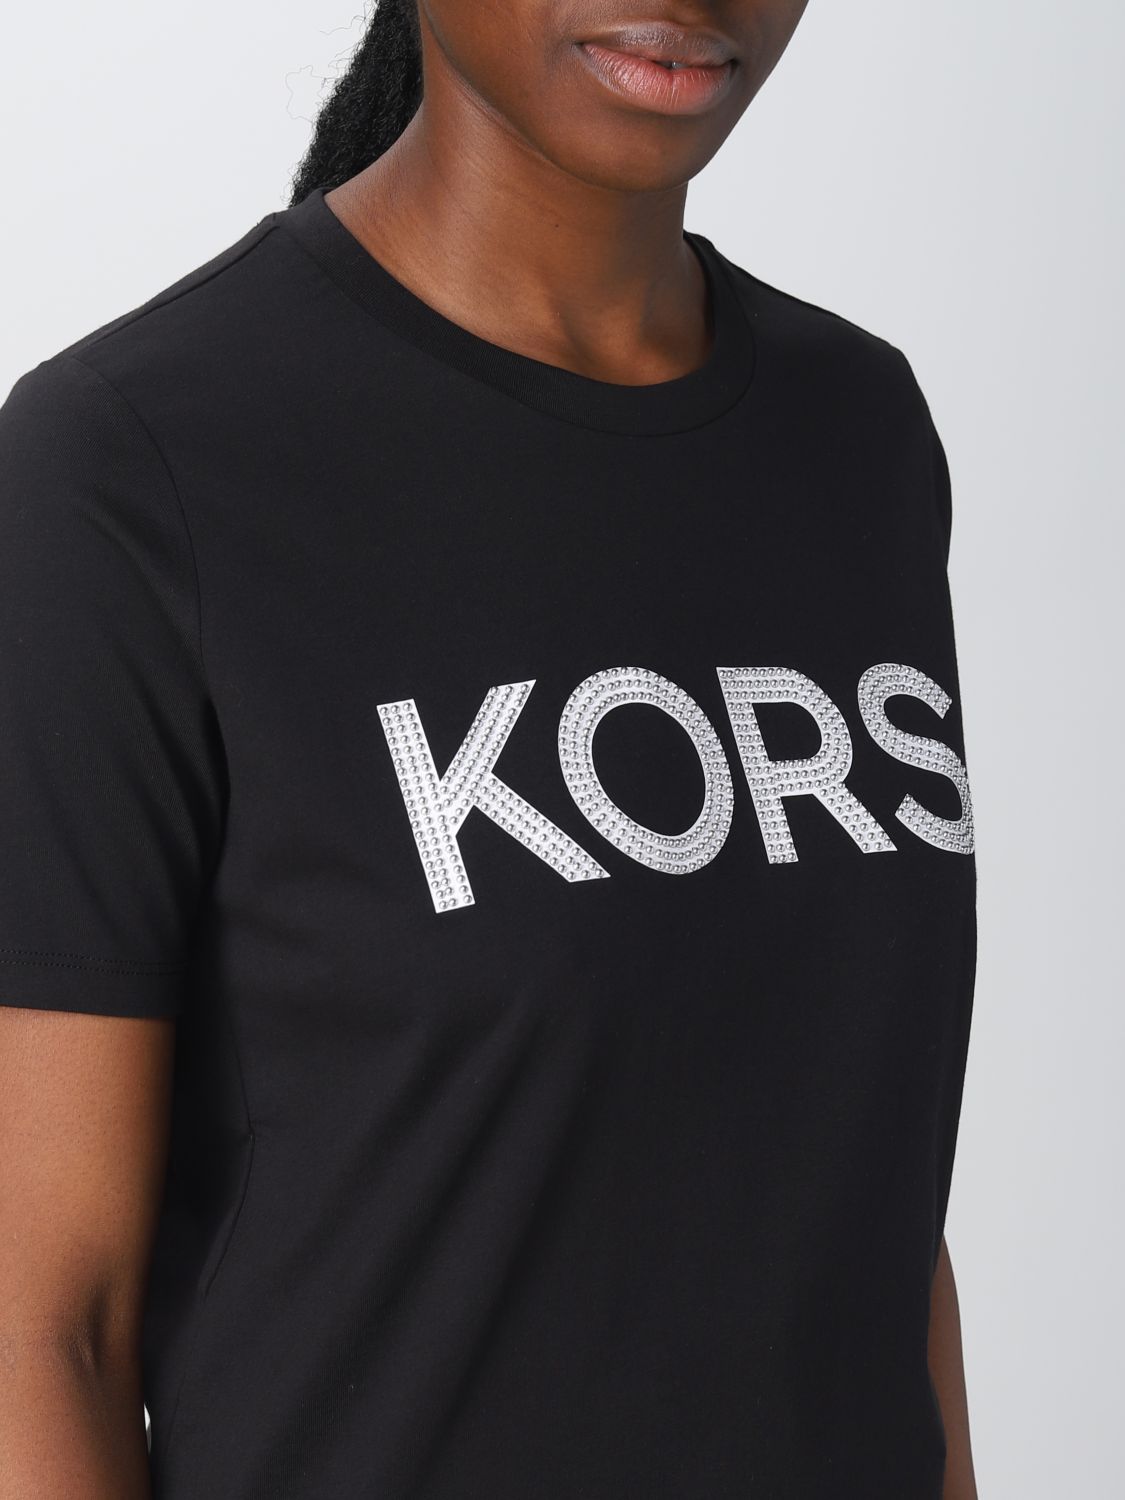 Michael Kors Outlet: t-shirt for woman - Black | Michael Kors t-shirt ...